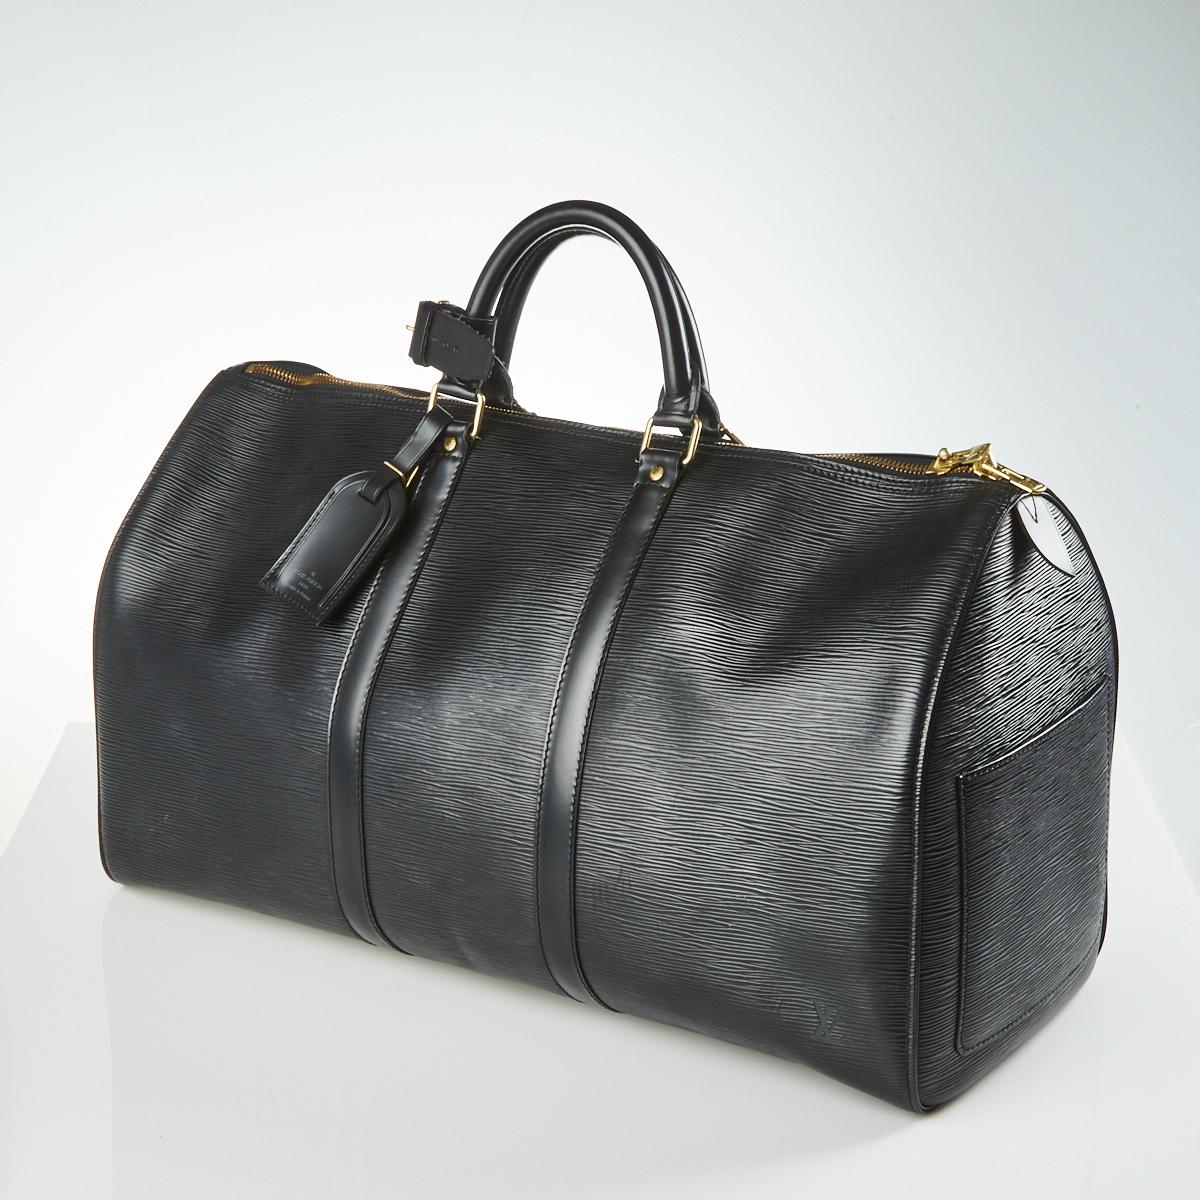 Louis Vuitton Keepall Bag Epi Leather 45 Black